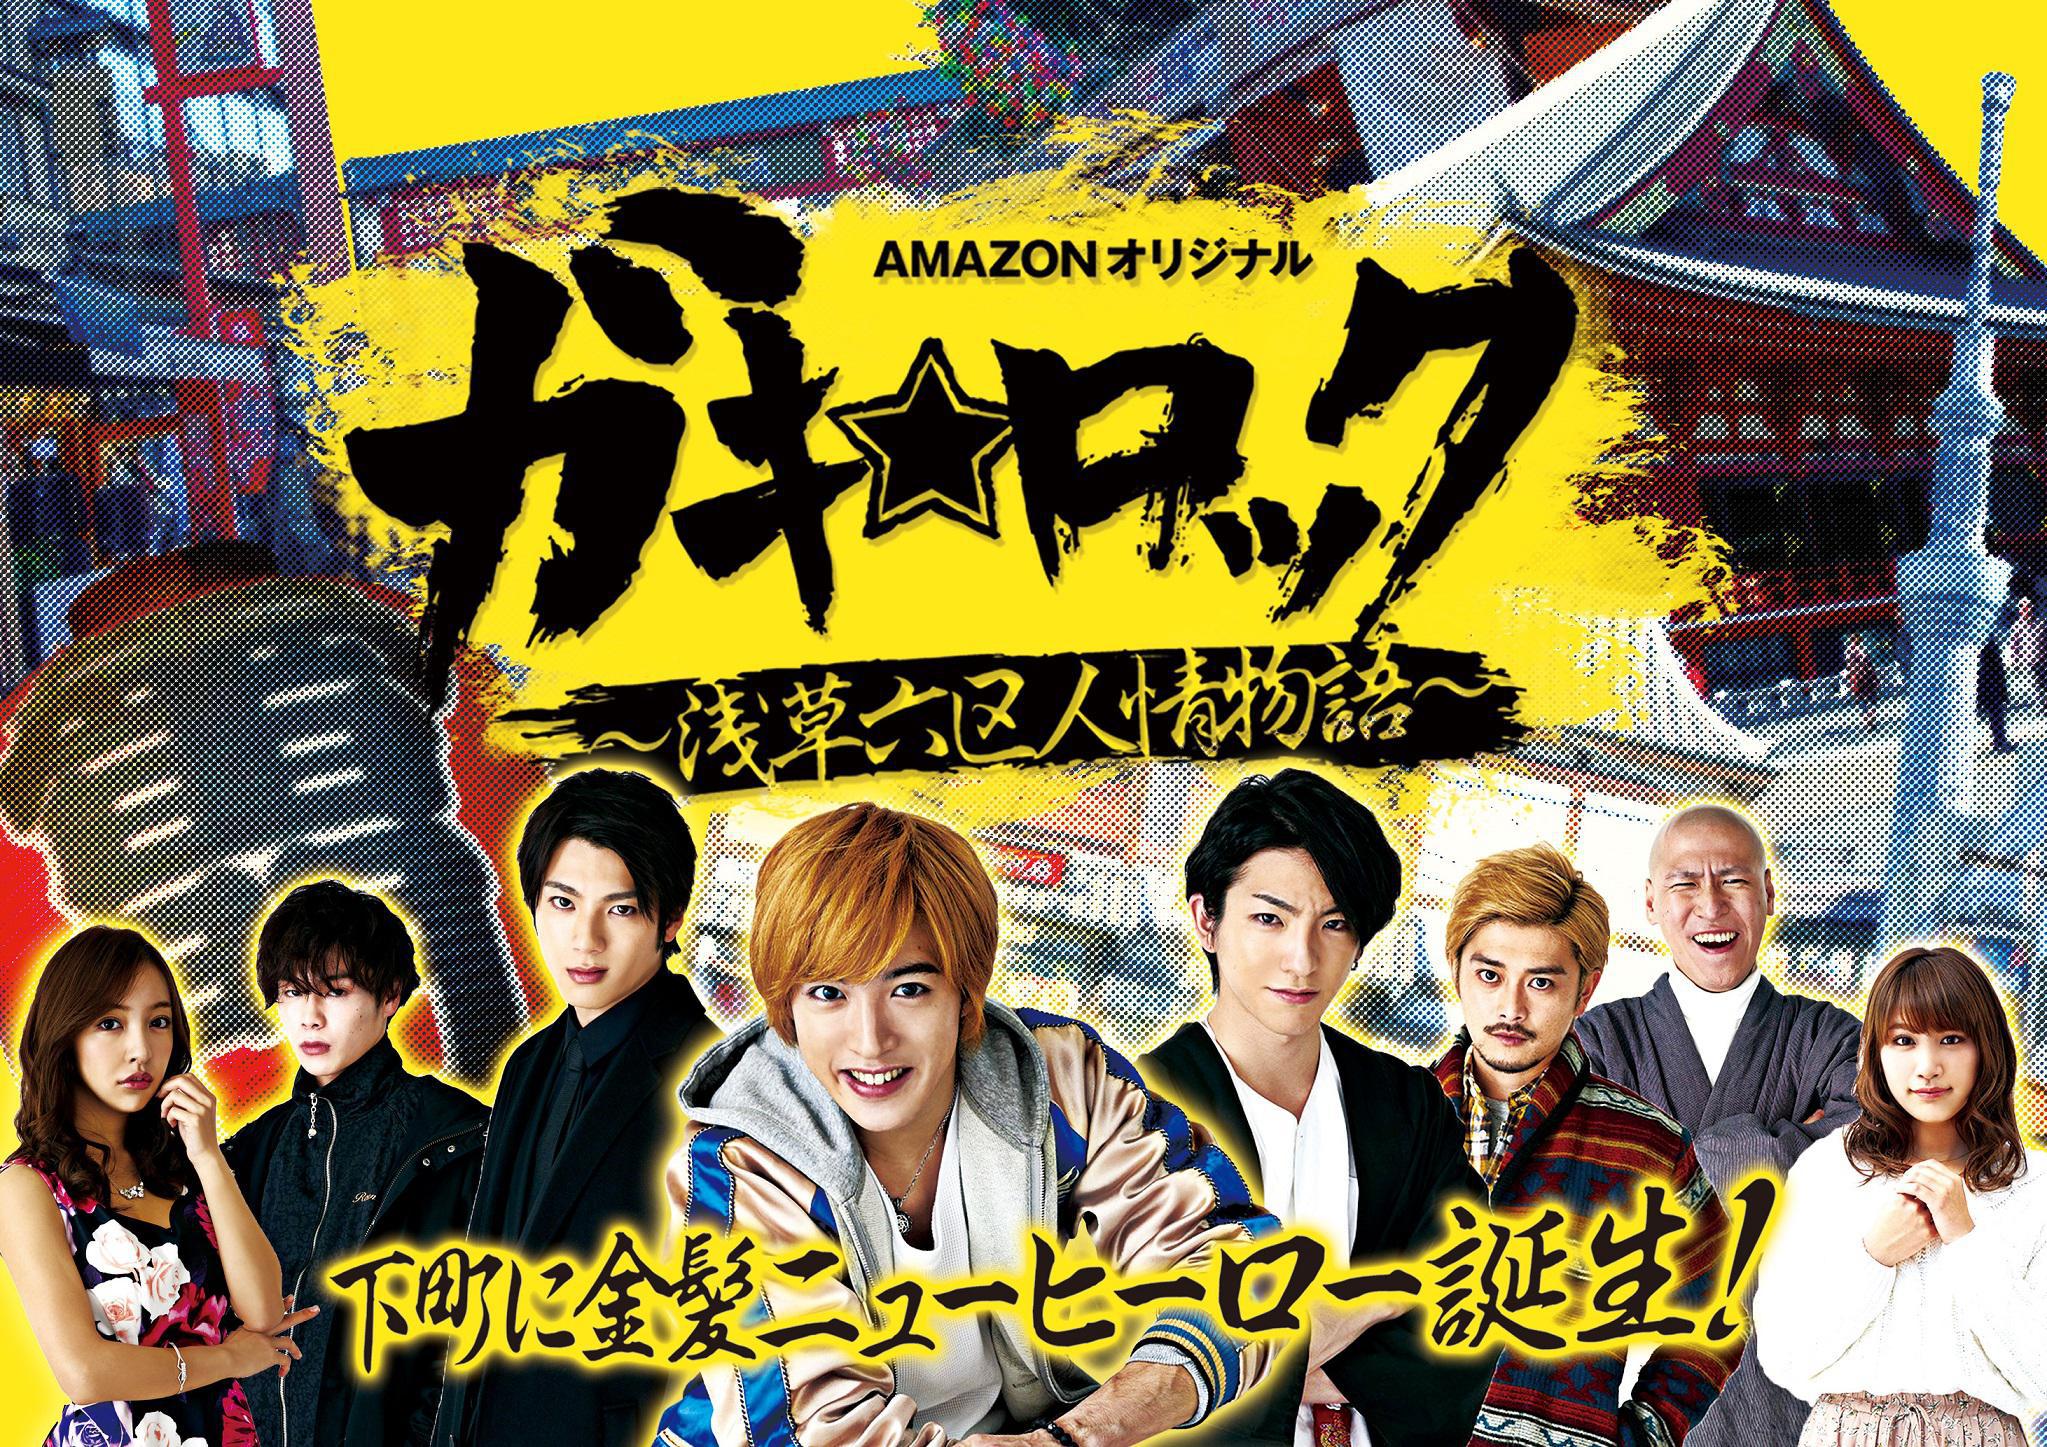 TV ratings for Gaki Rock: Asakusa Roku-ku Ninjo Monogatari in South Korea. Amazon Prime Video TV series